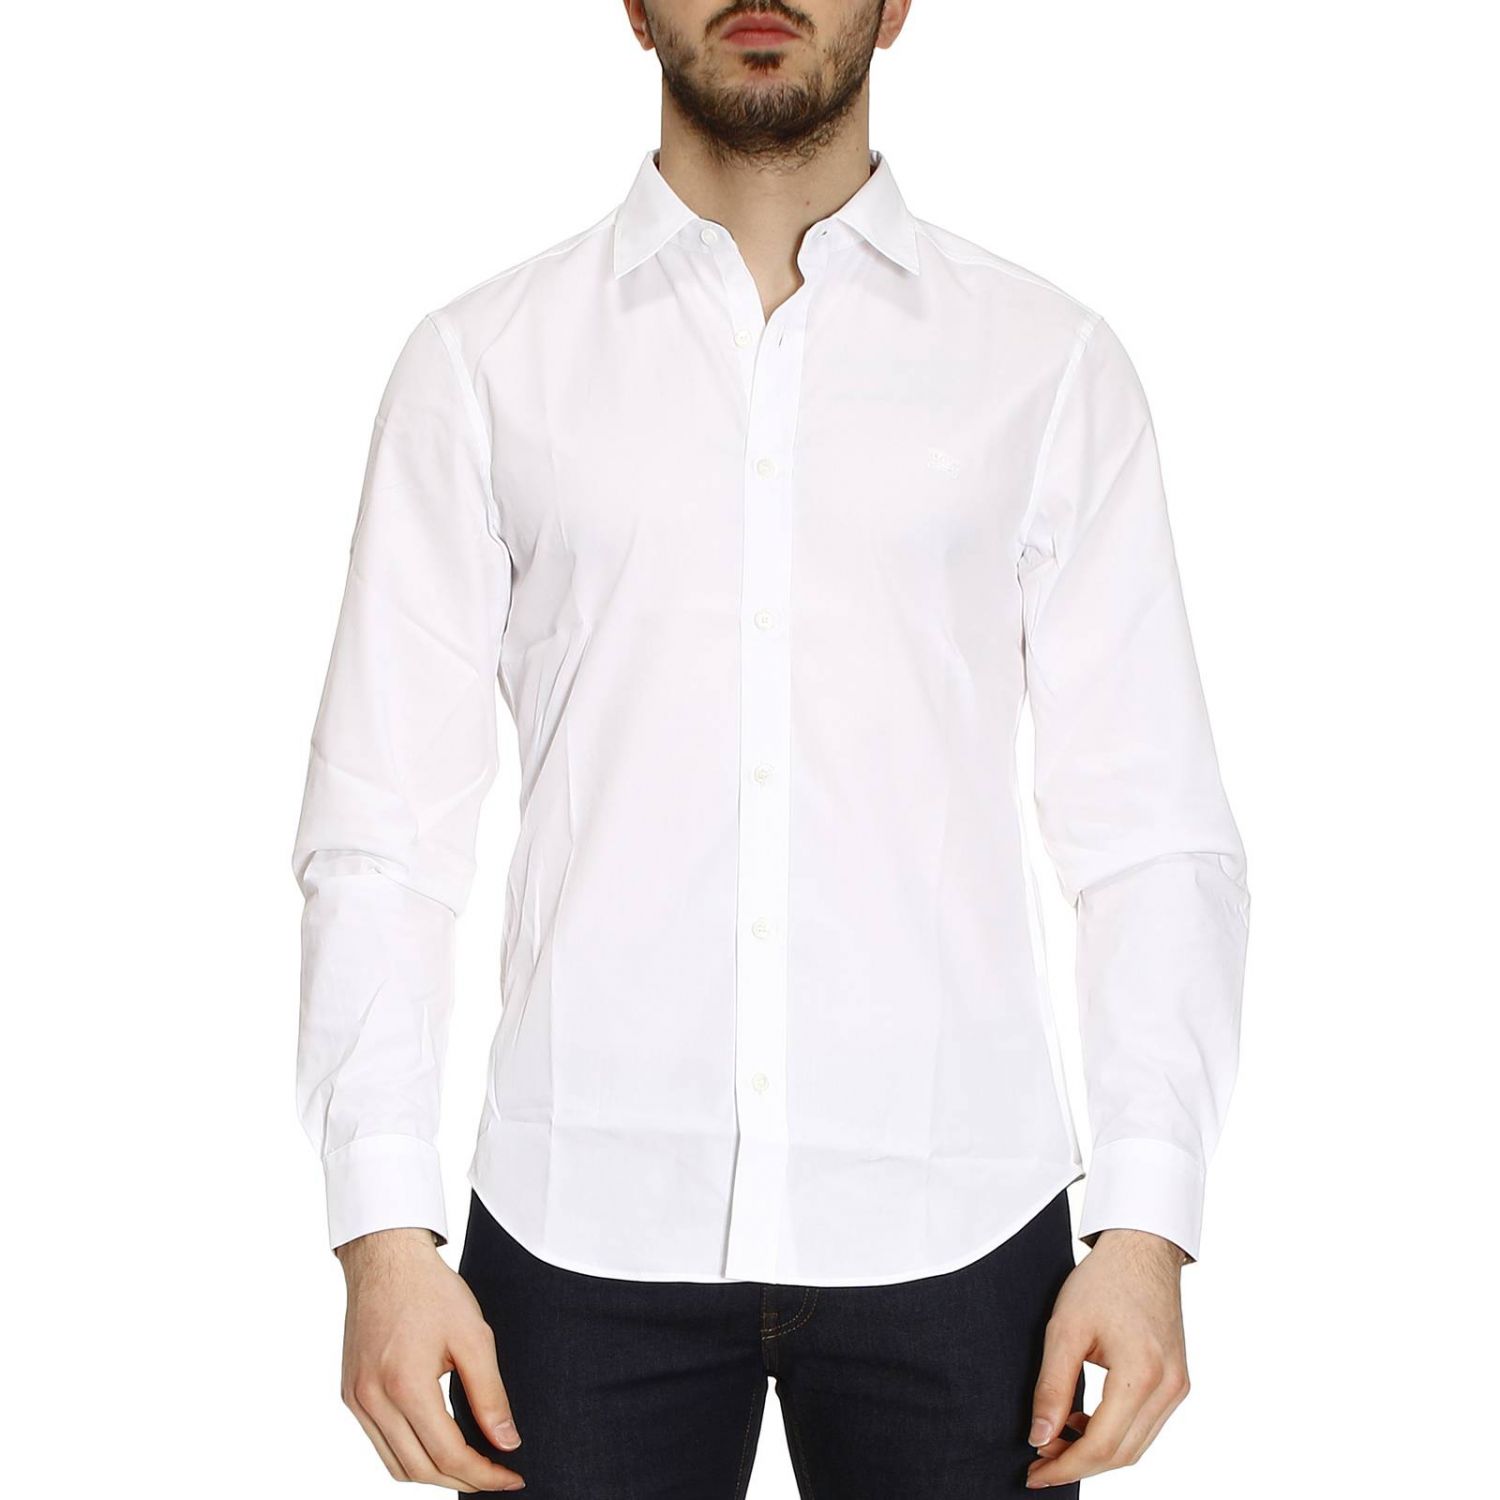 Burberry Outlet: Shirt men | Shirt Burberry Men White | Shirt Burberry ...